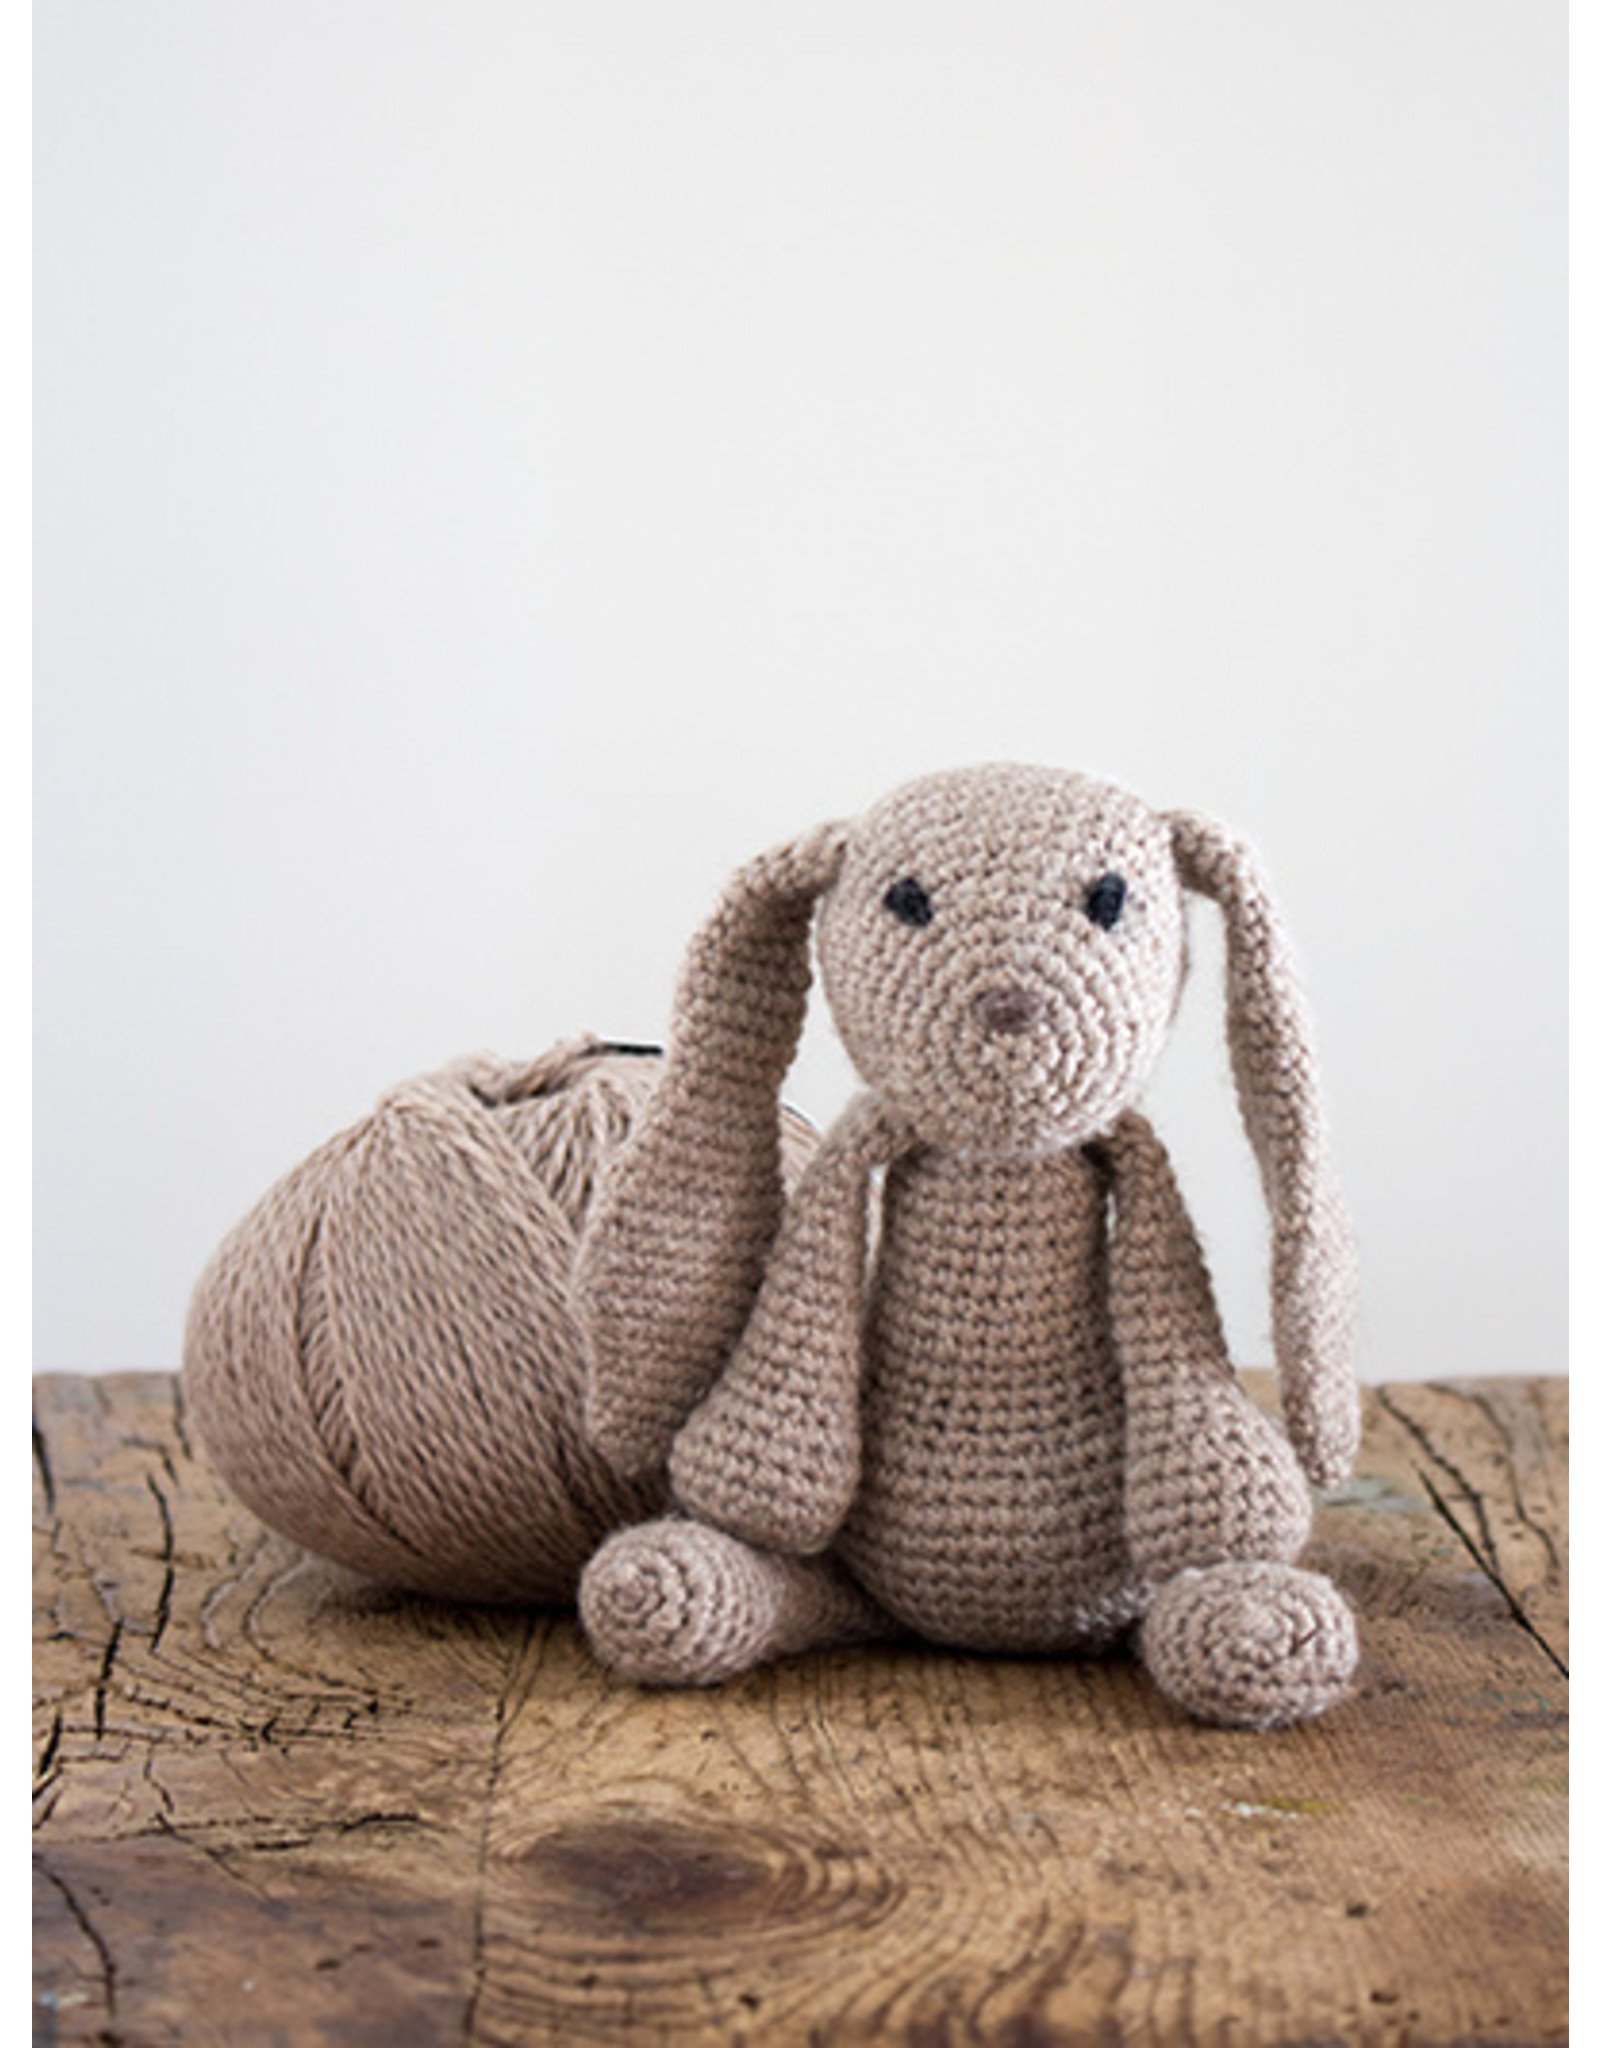 Stranded by the Sea Class: Amigurumi Crochet Animals